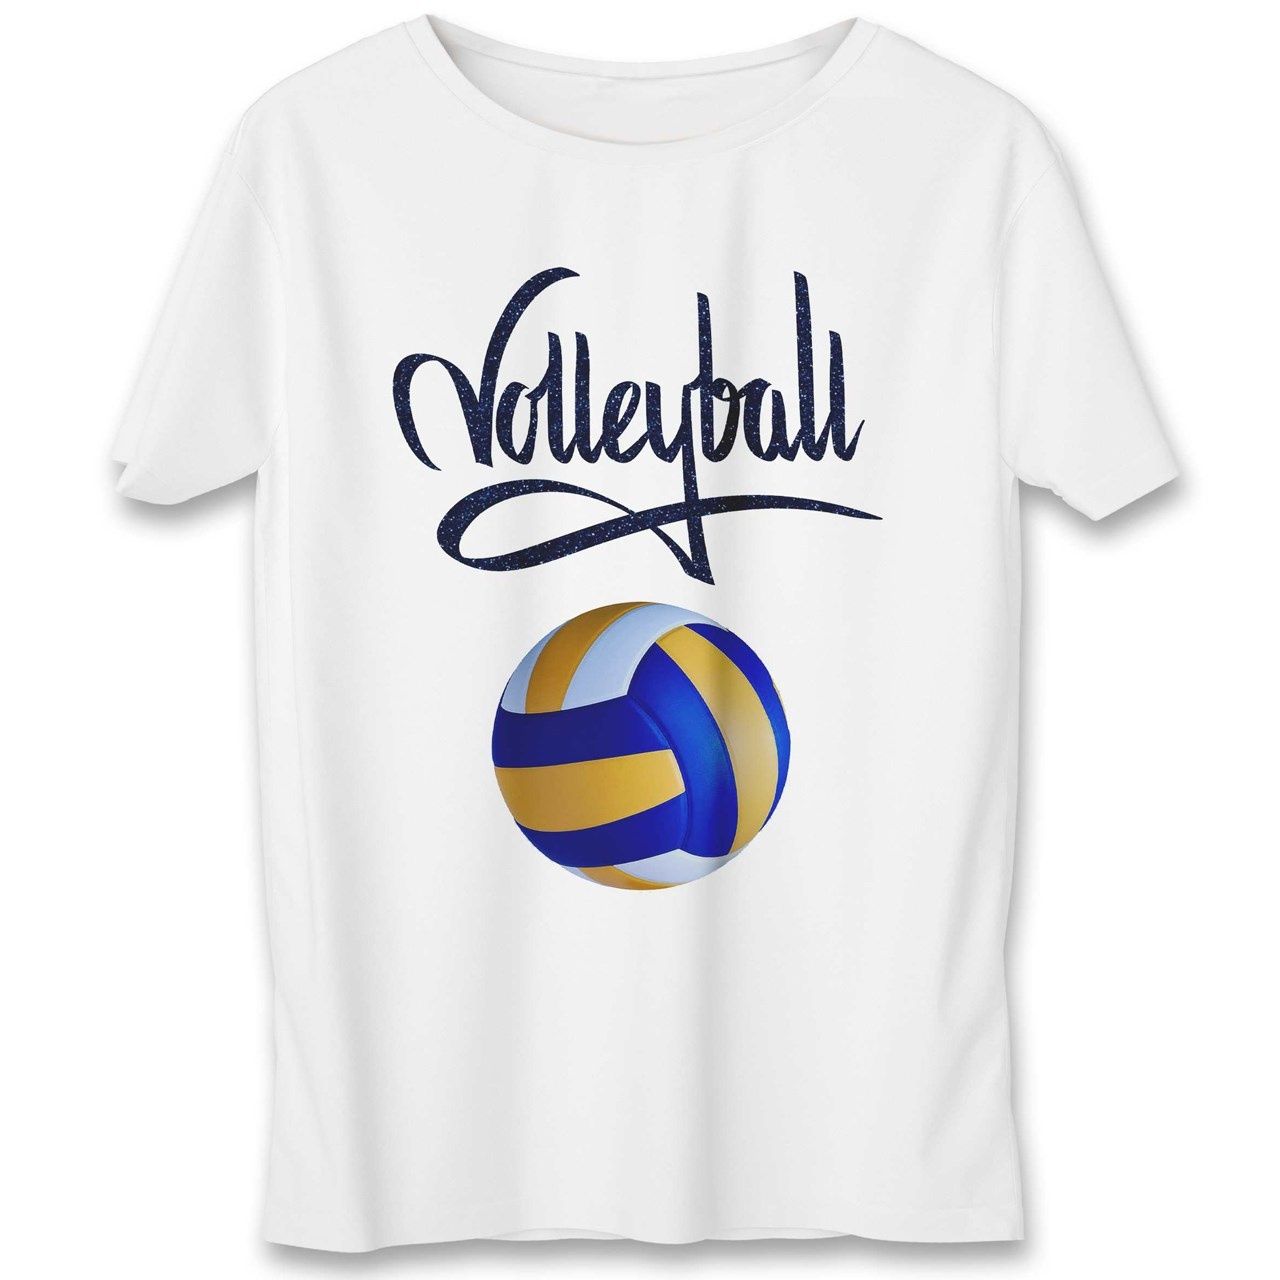 تی شرت مردانه به رسم طرح توپ والیبال کد 342 -  - 1